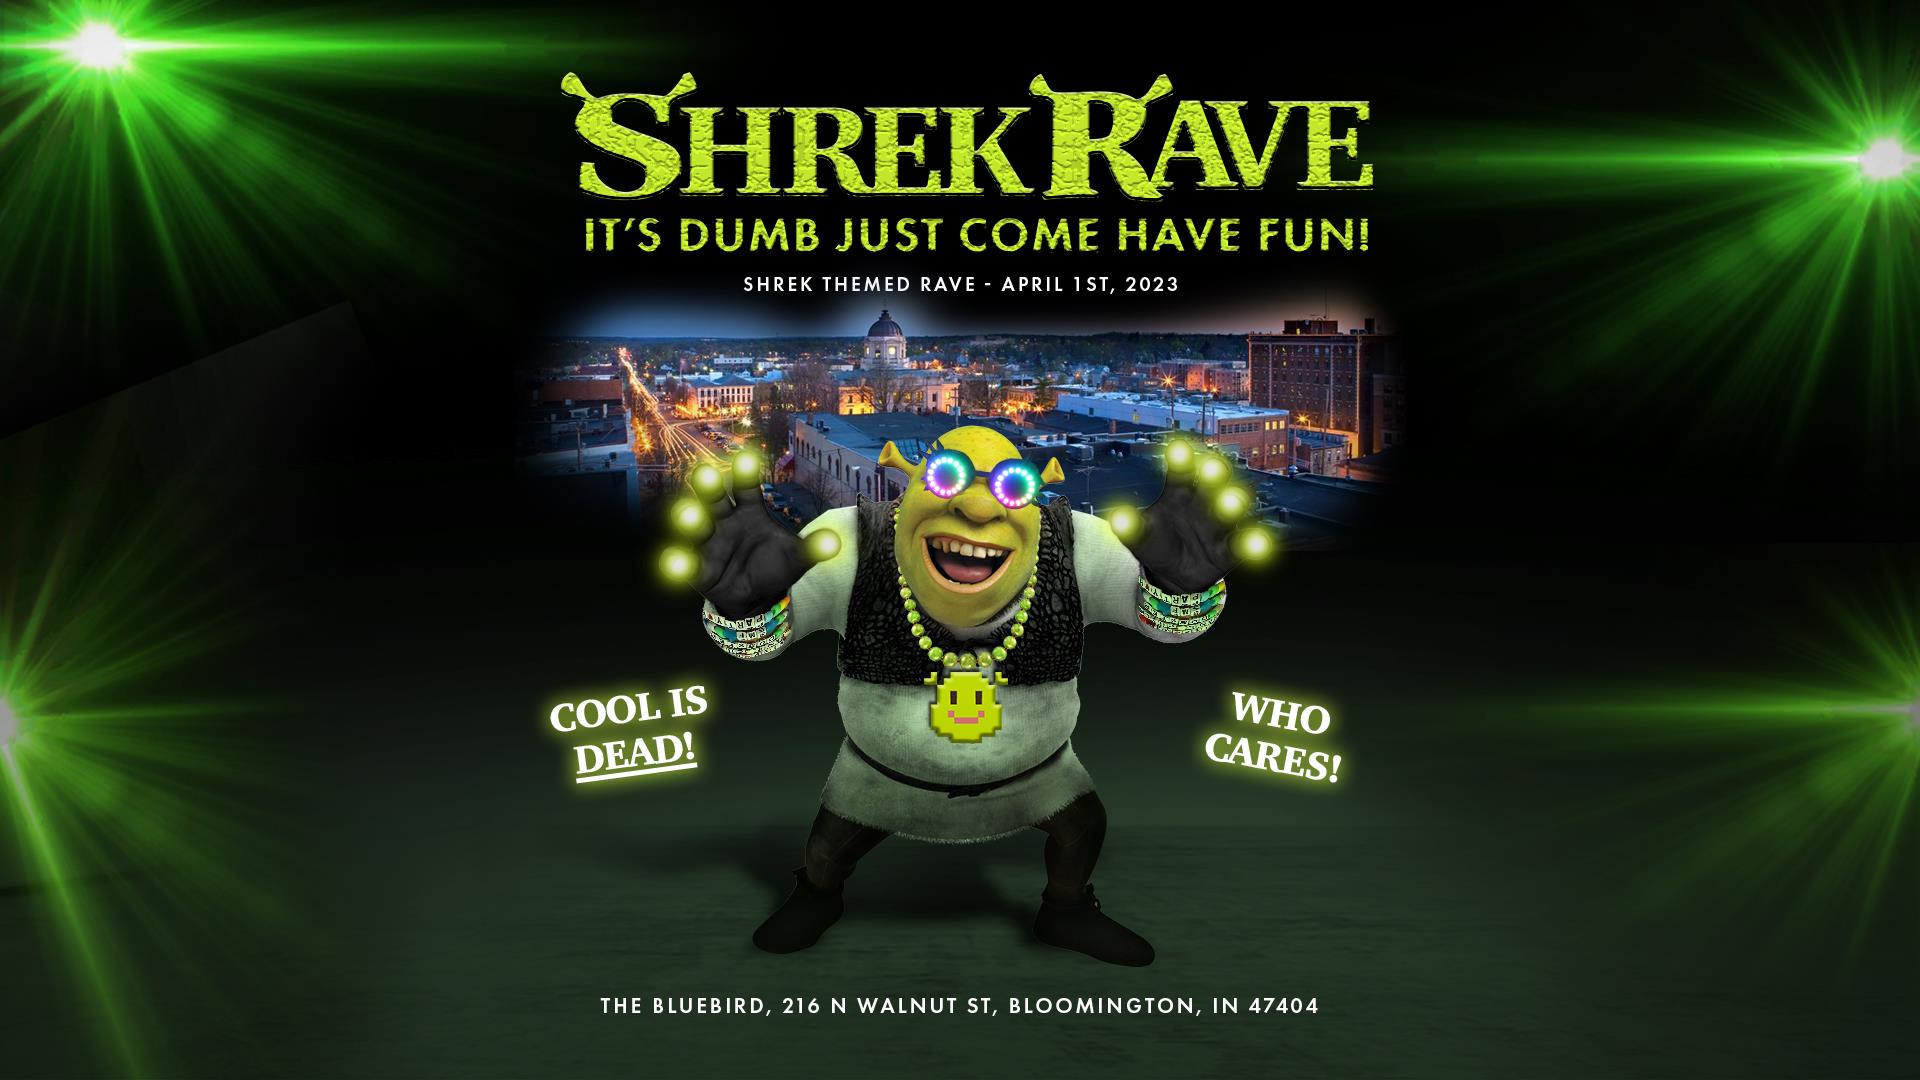 Buy Tickets to Shrek Rave in Bloomington on Apr 01, 2023